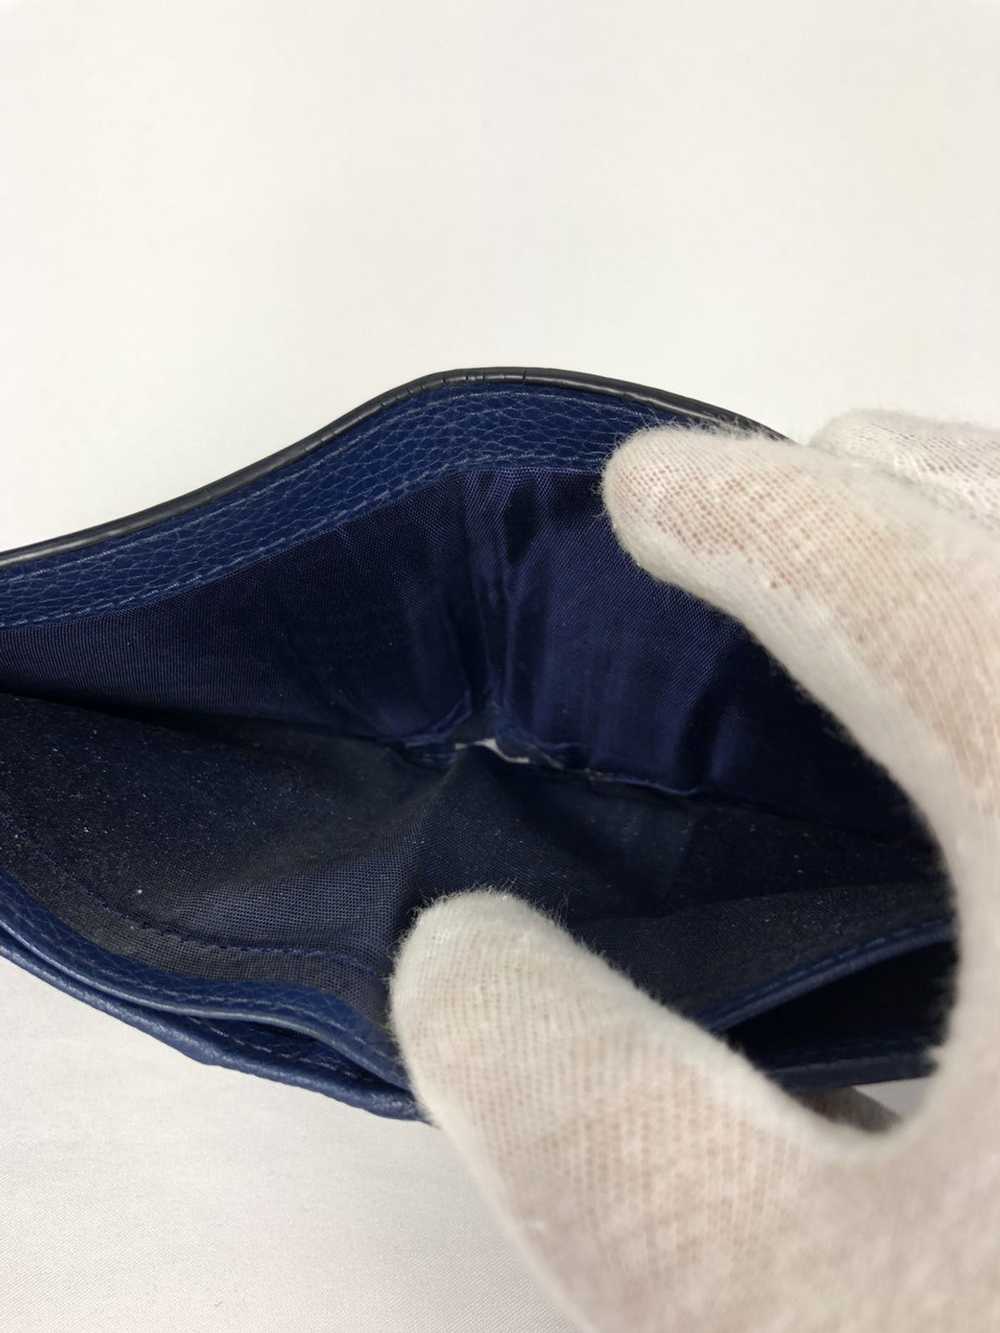 Prada Prada blue leather bifold wallet - image 5